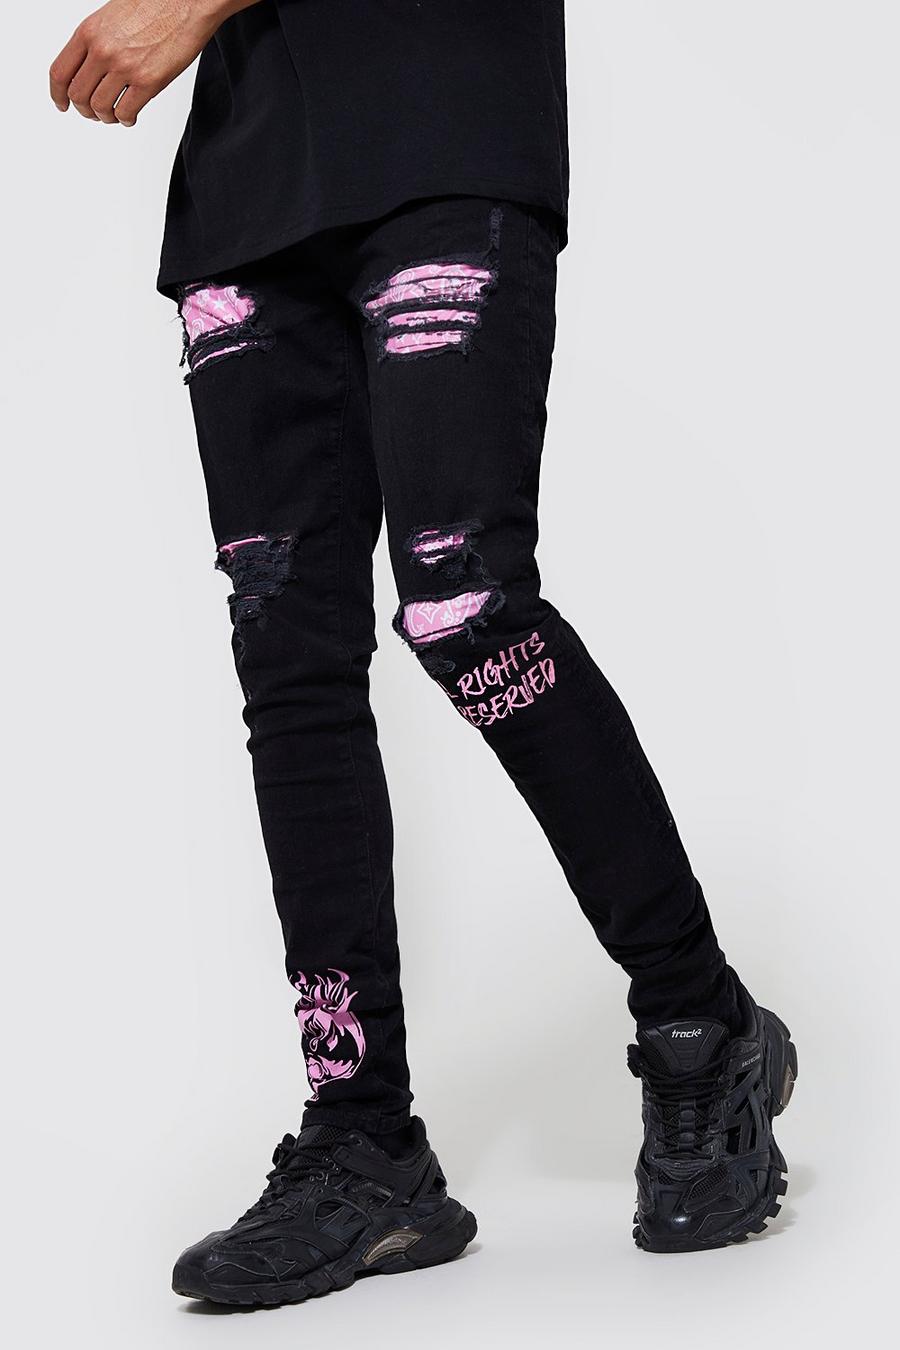 Black nero סקיני ג'ינס עם דוגמת בנדנה-גרפיטי וקרעים, לגברים גבוהים